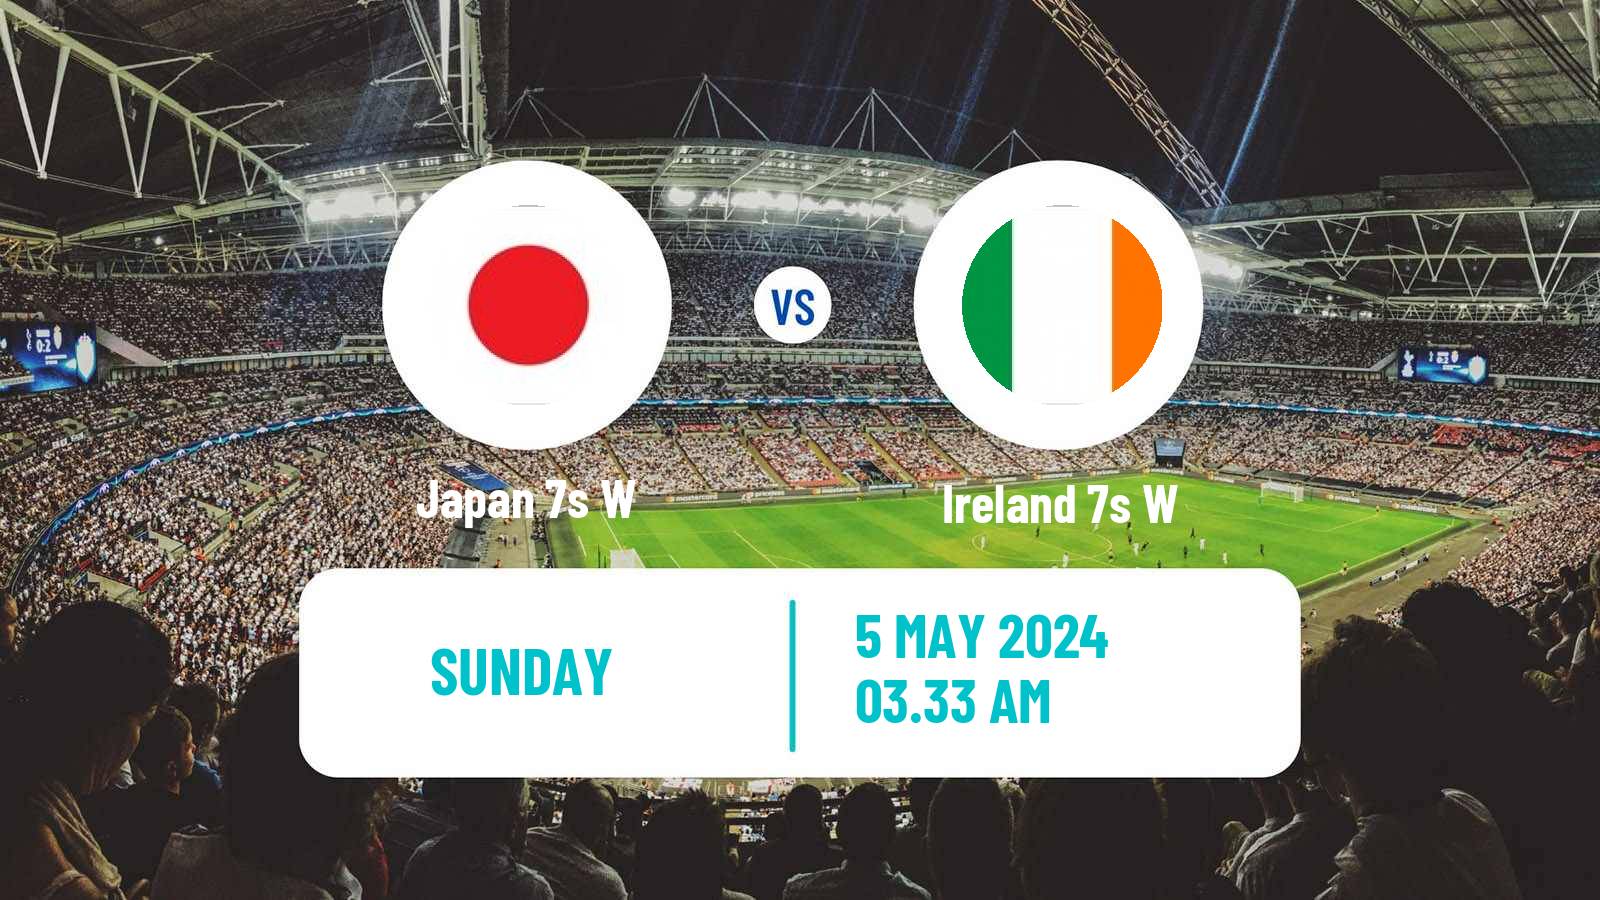 Soccer Sevens World Series Women - Singapore Japan 7s W - Ireland 7s W